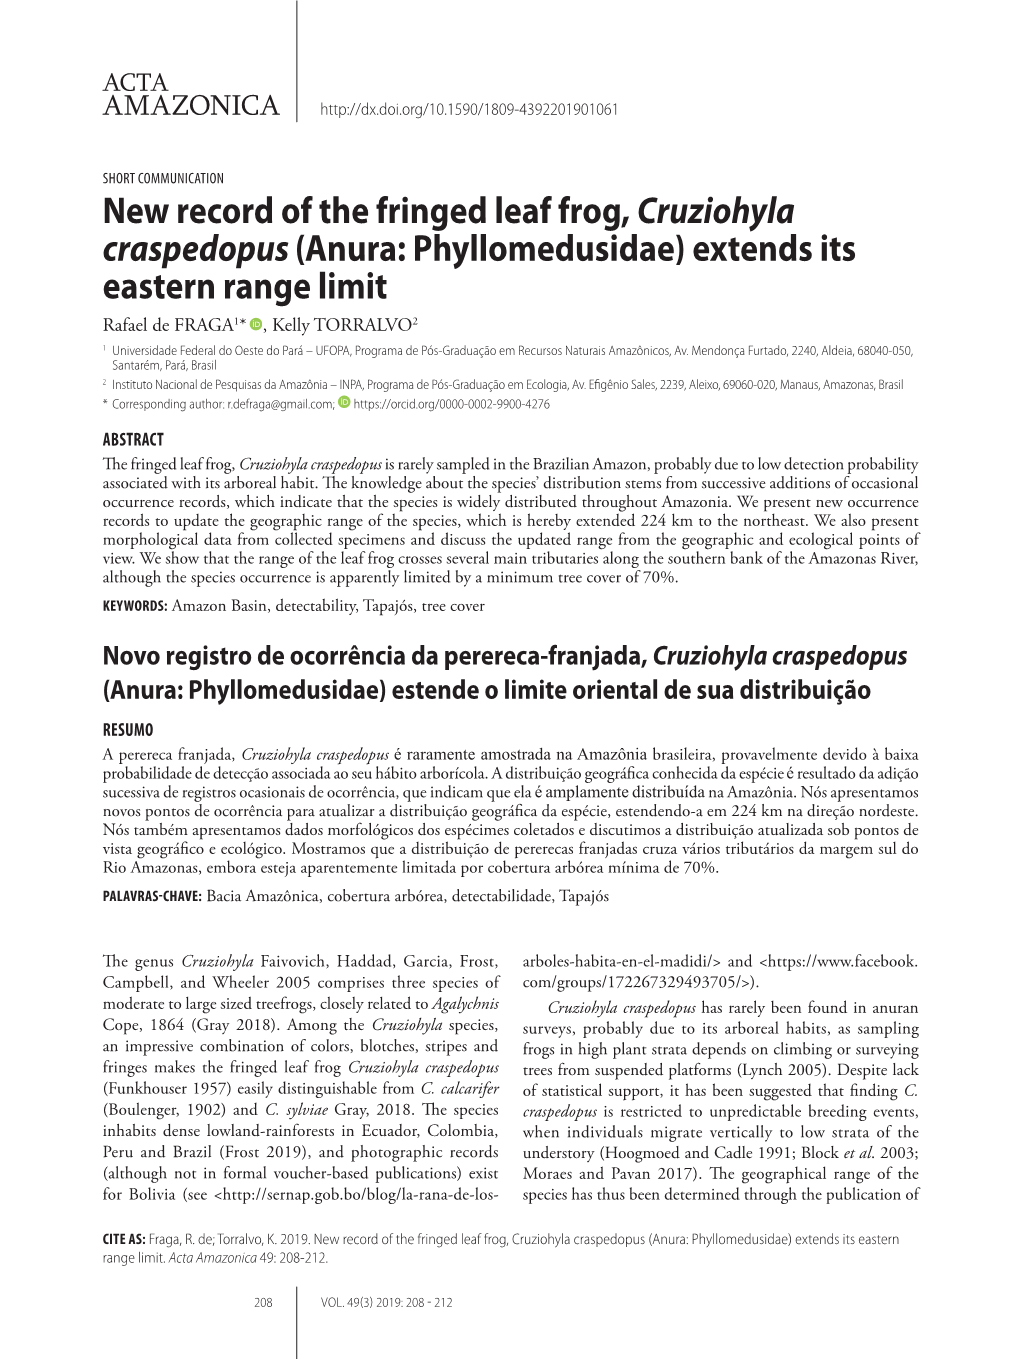 New Record of the Fringed Leaf Frog, Cruziohyla Craspedopus